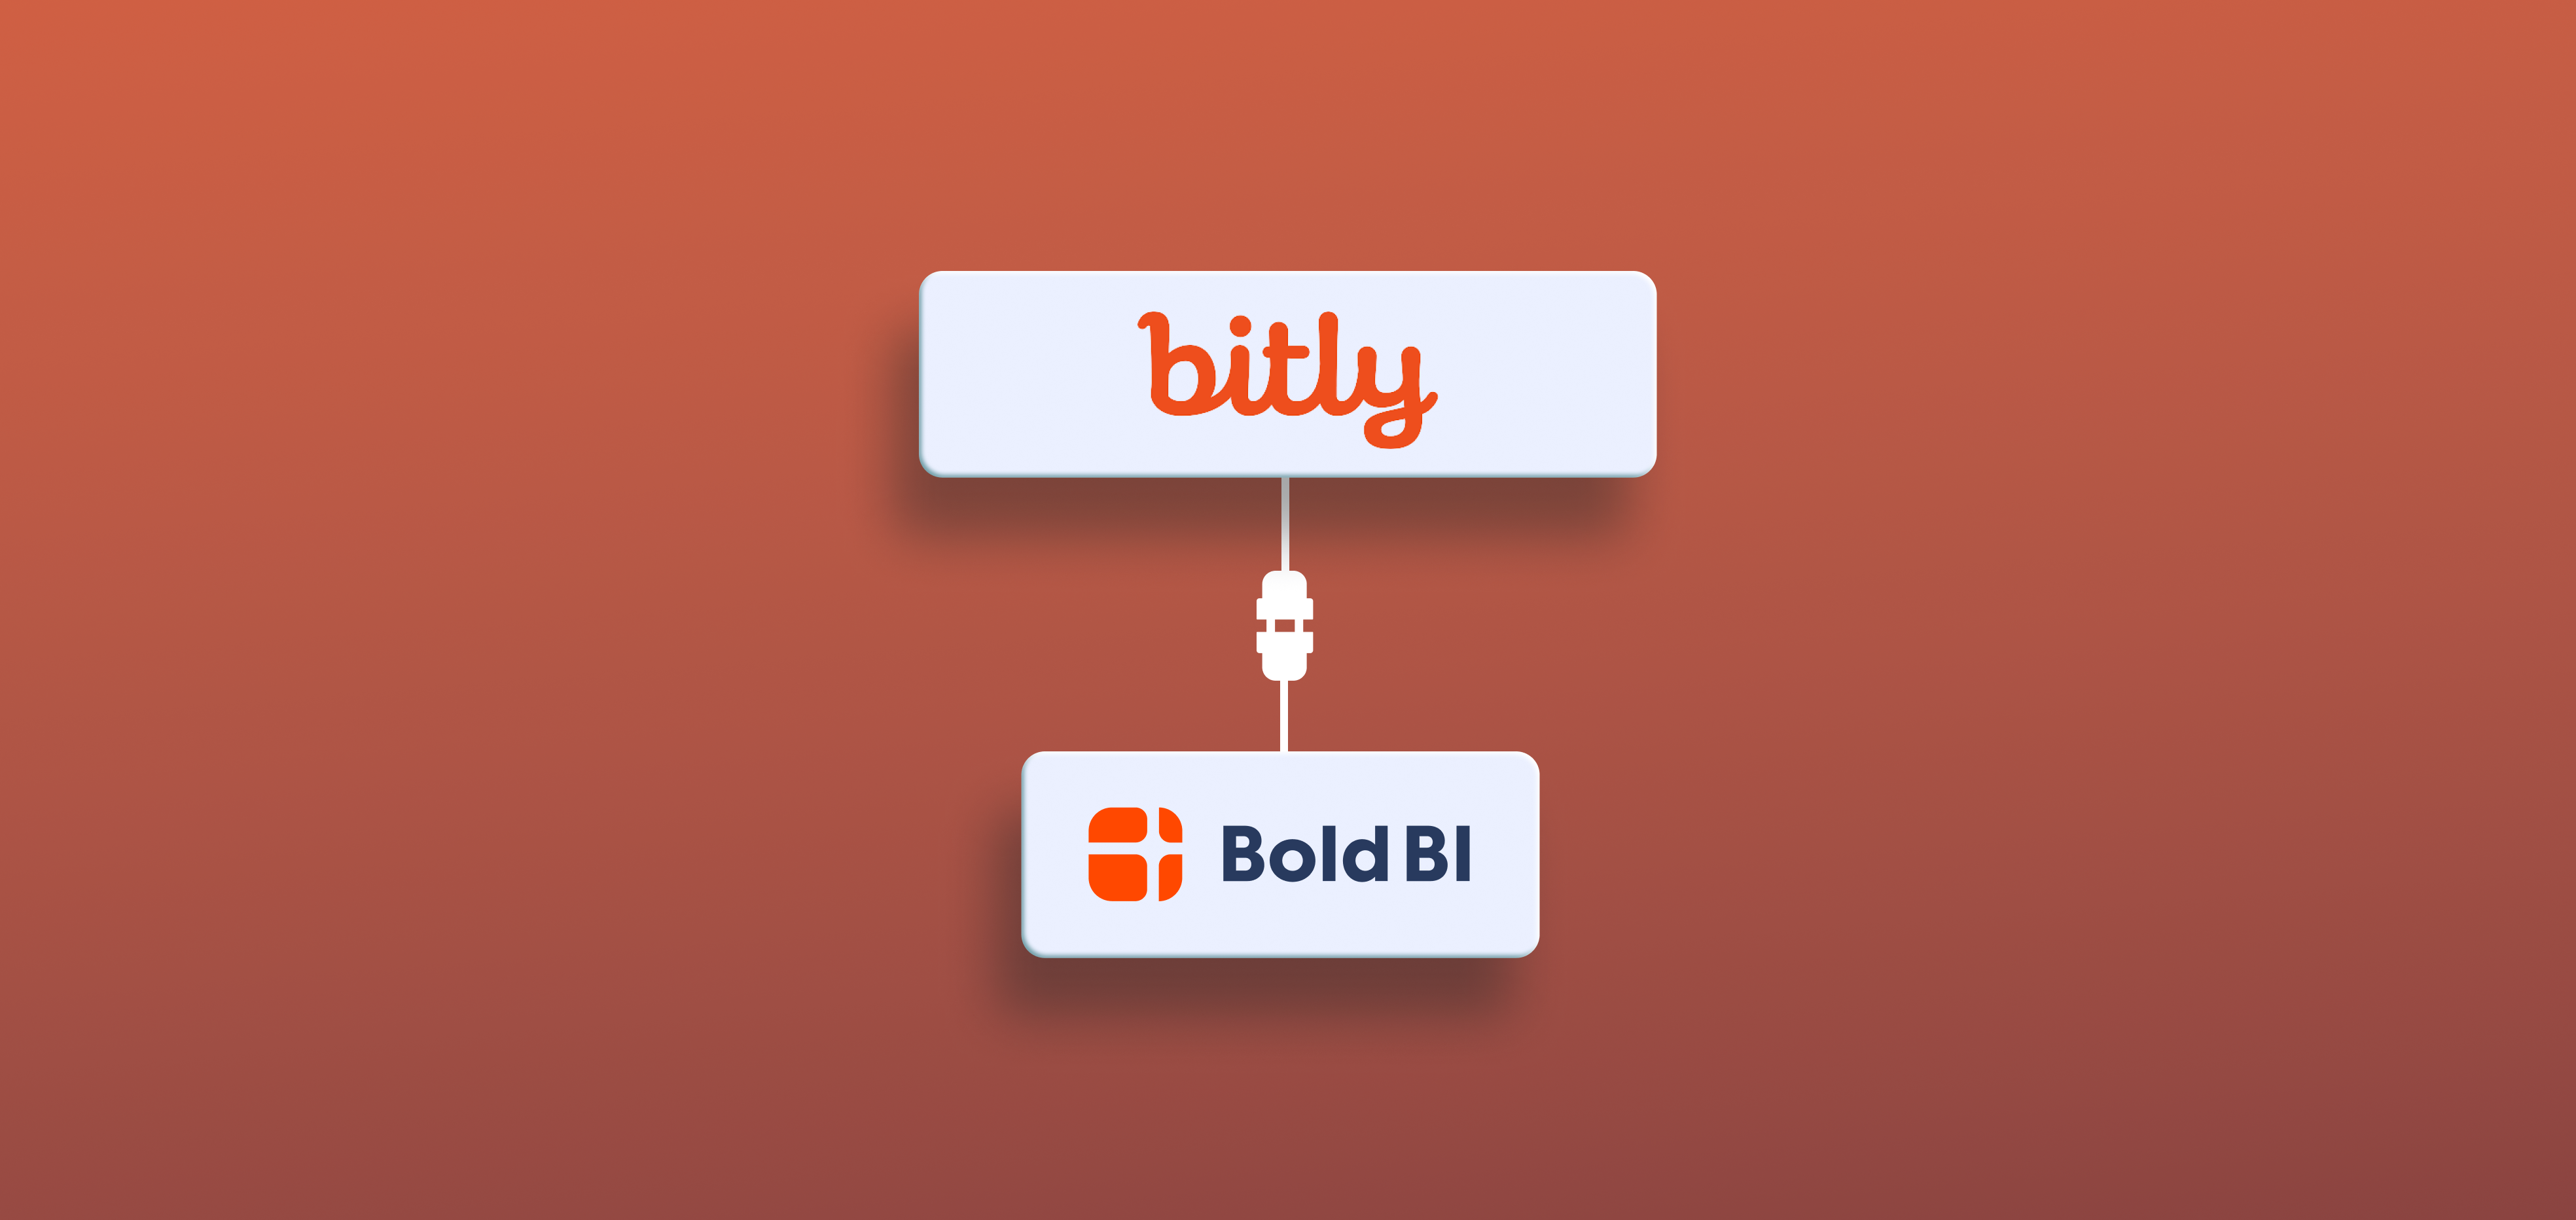 Connecting Bold BI to Bilty data source